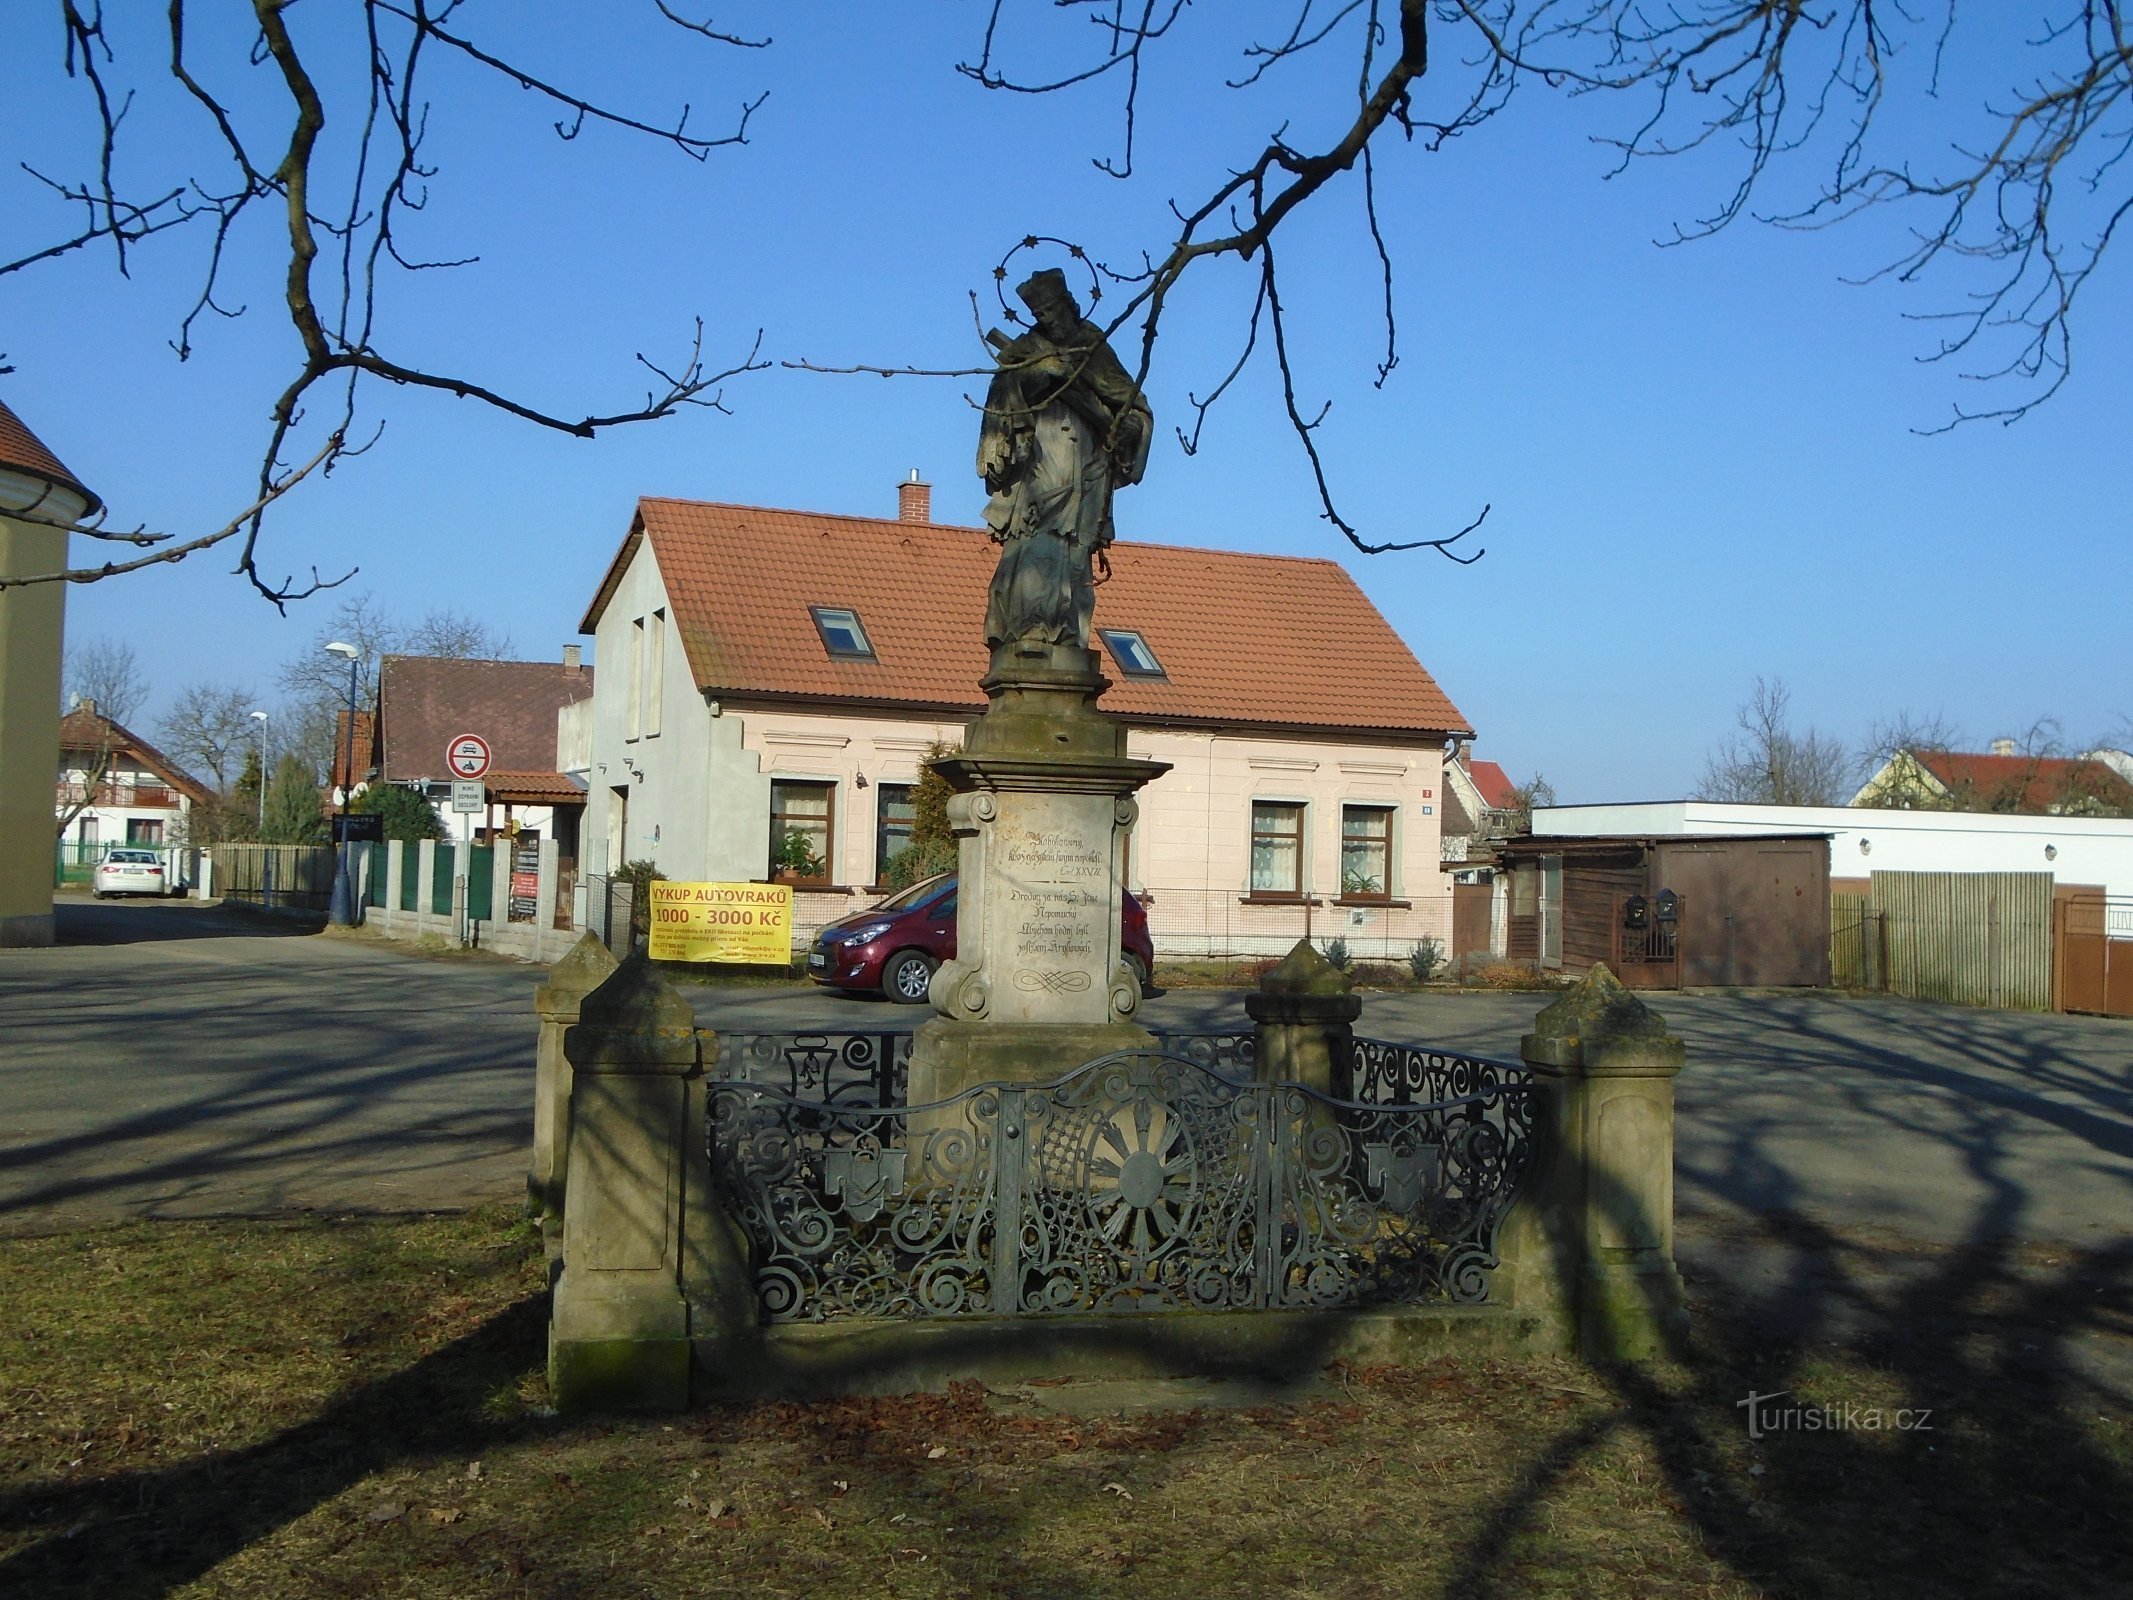 Staty av St. Johannes av Nepomuck i Pouchov (Hradec Králové)